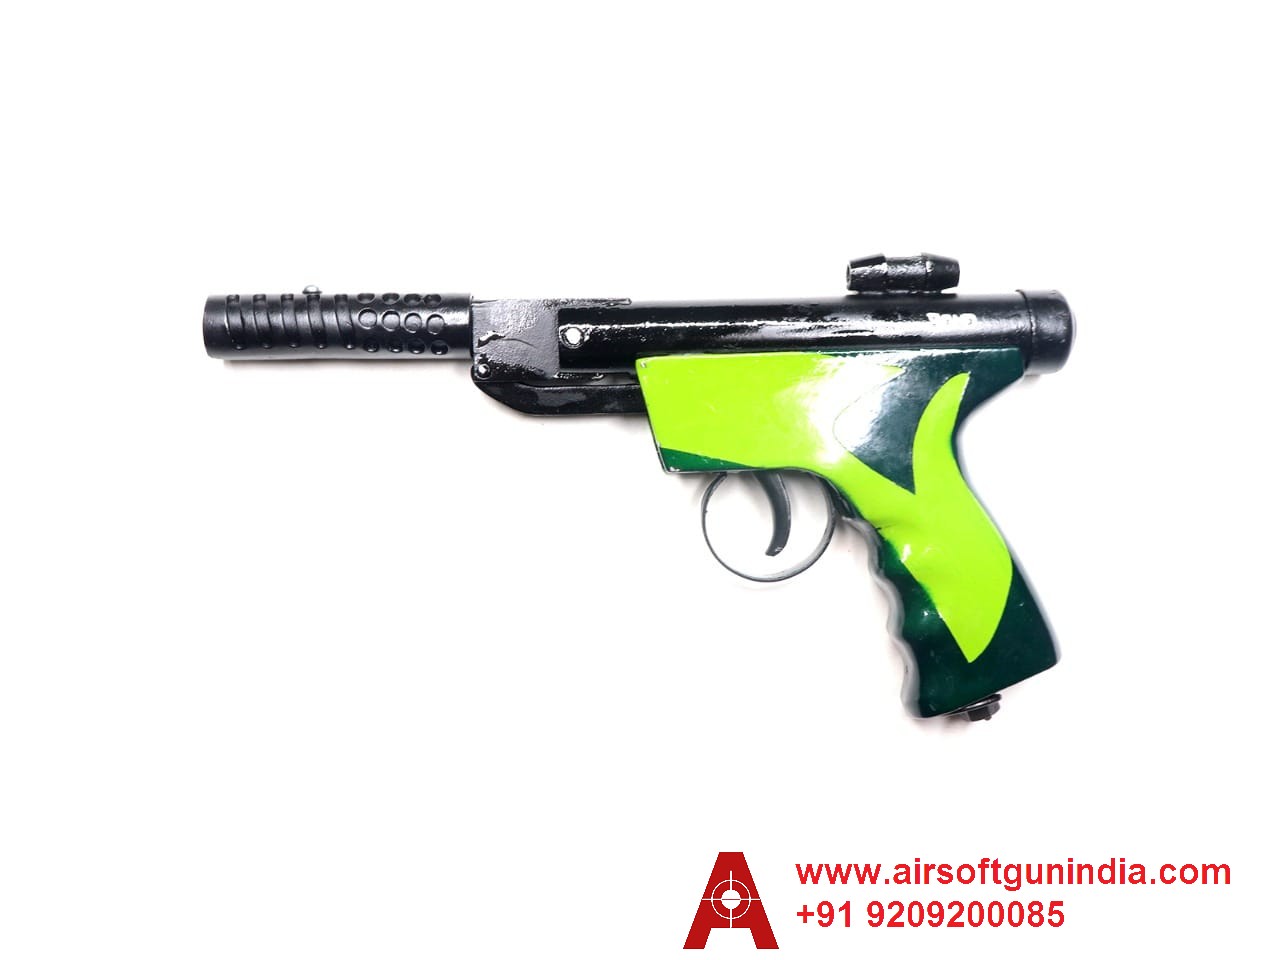 Bond Target Green Color Grip Single-Shot .177 Caliber / 4.5 Mm Indian Air Pistol By Airsoft Gun India